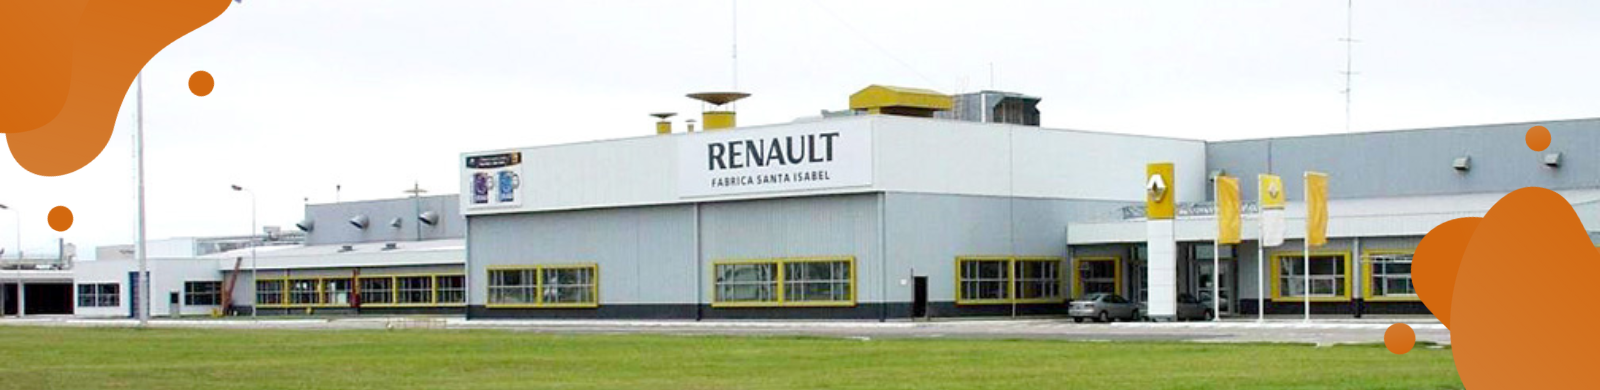 Pasantía Renault